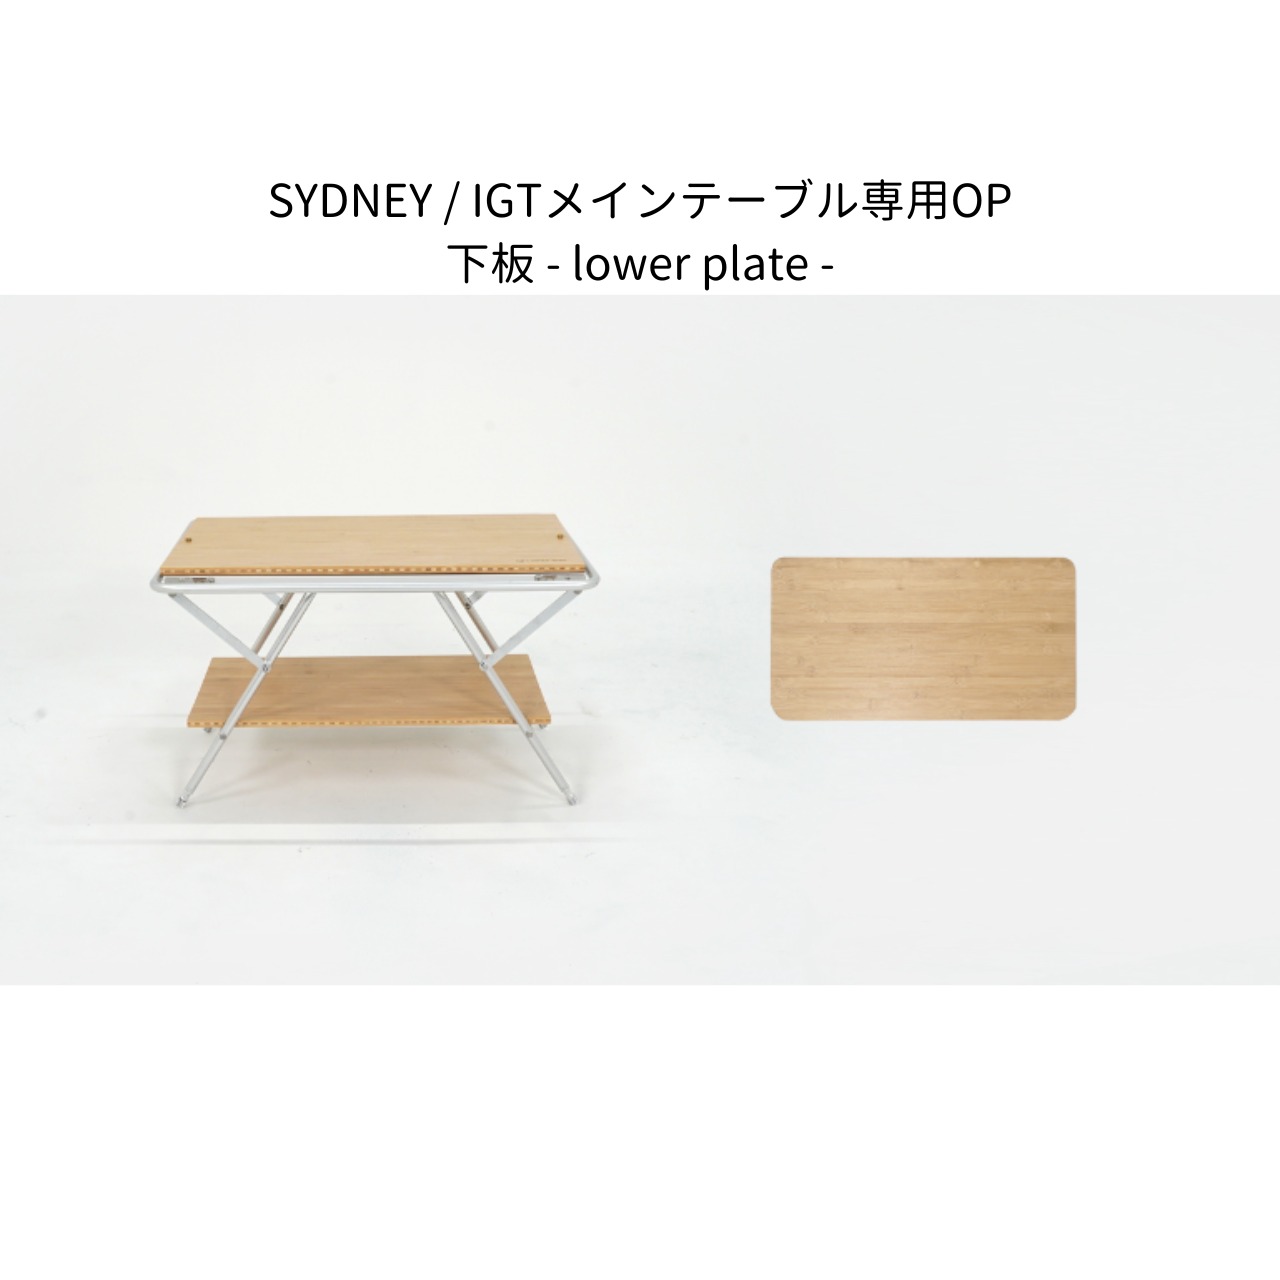 lower plate -下板 -（SYDNEY / IGT MAIN TABLE 専用OP）3色展開【black / khaki / wood 】